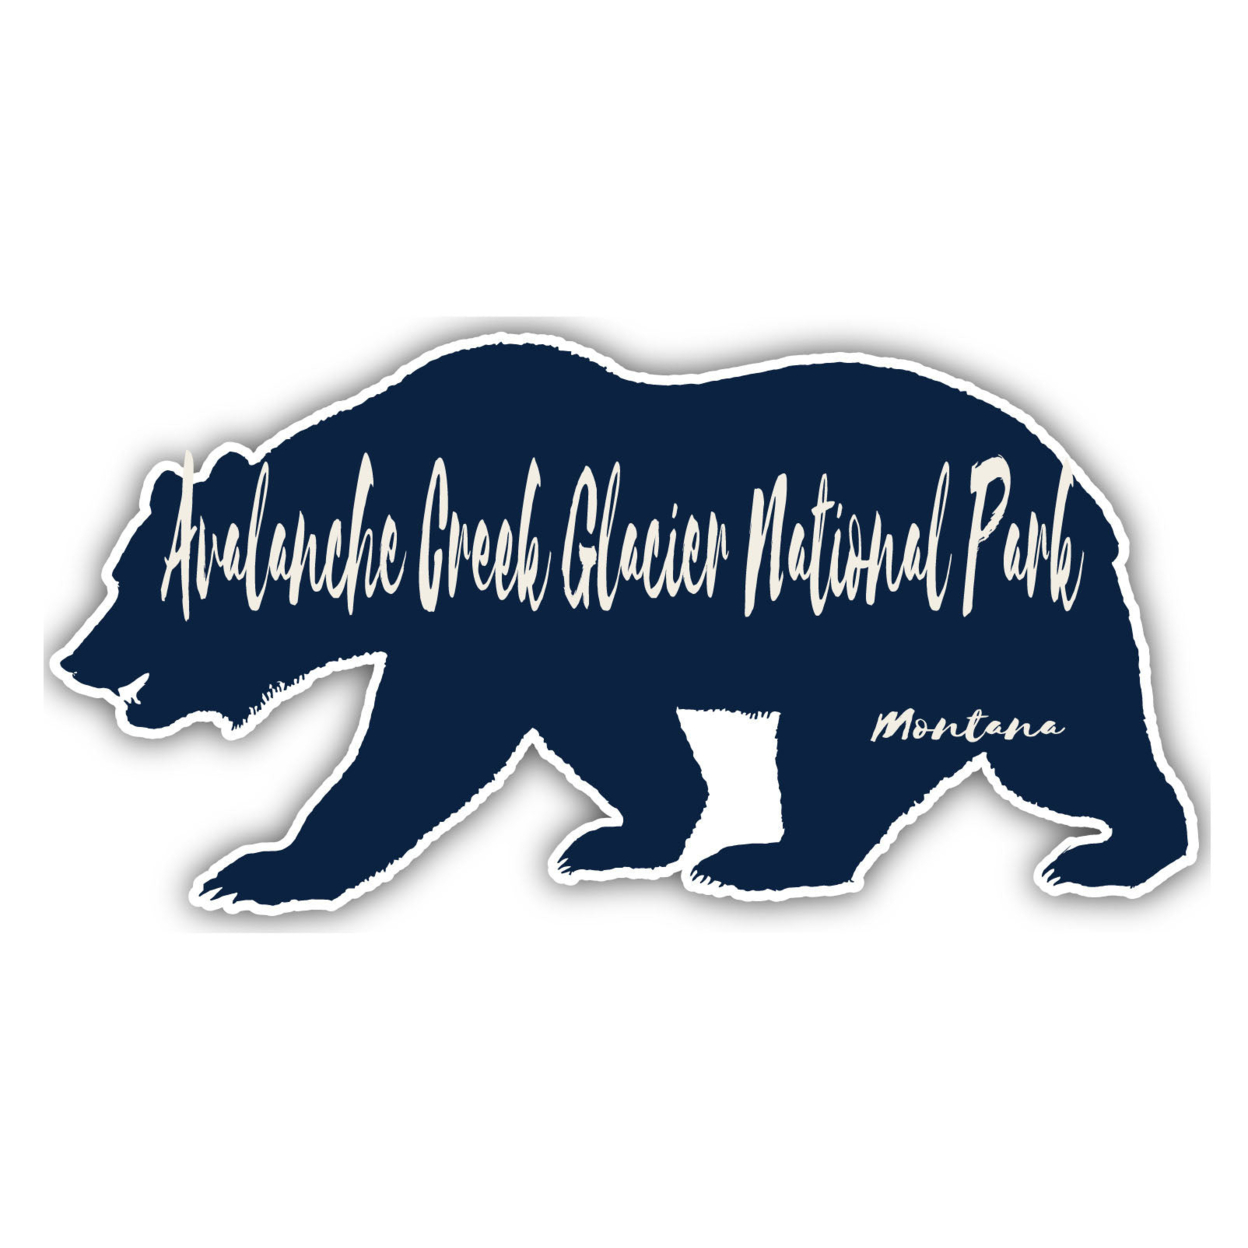 Avalanche Creek Glacier National Park Montana Souvenir Decorative Stickers (Choose Theme And Size) - Single Unit, 12-Inch, Bear